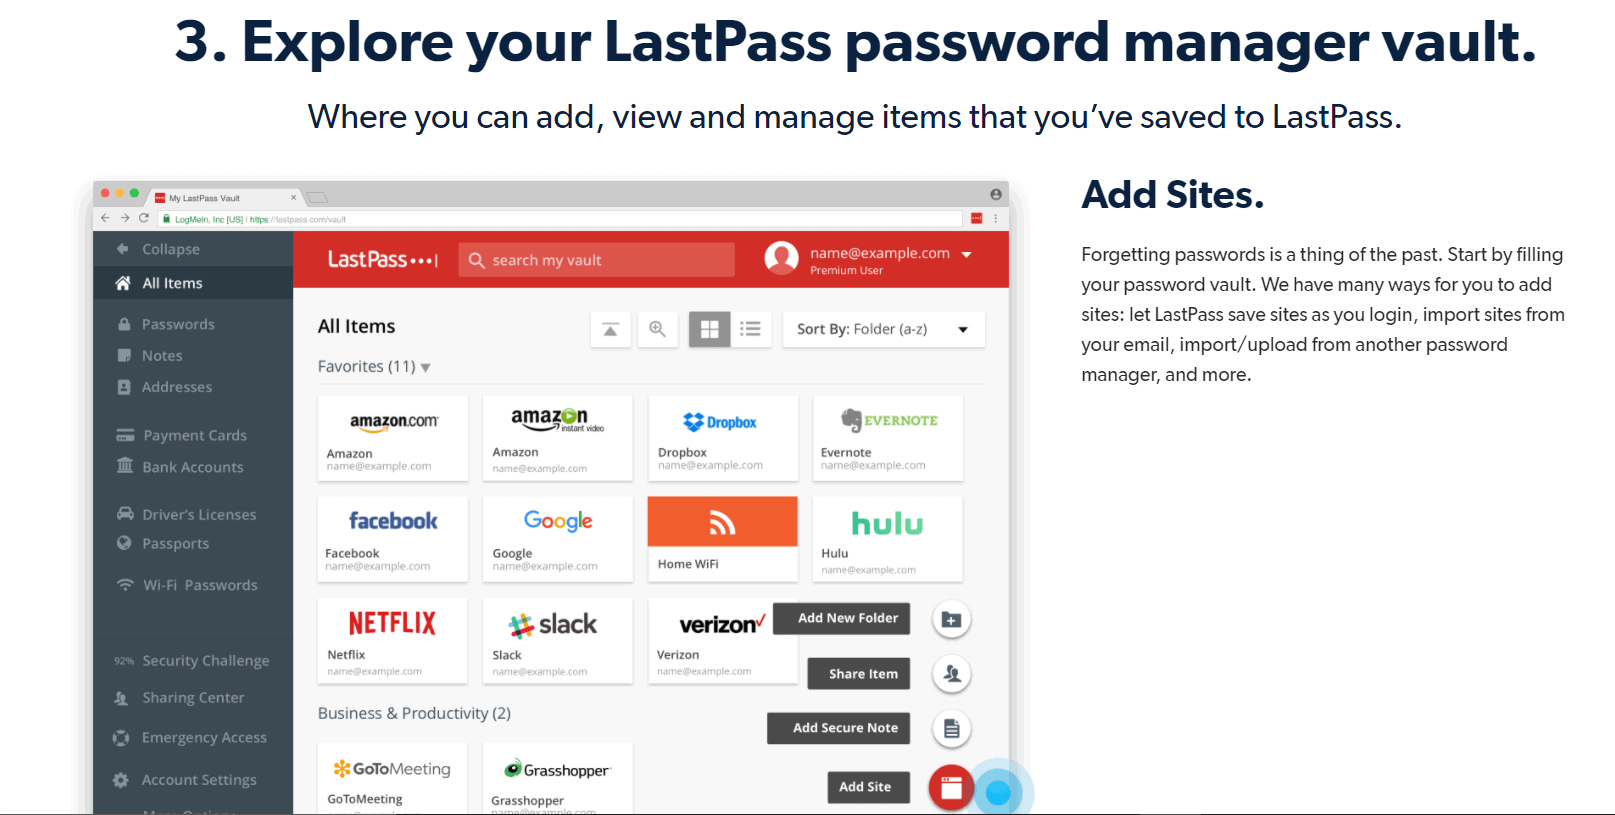 Explore your LastPass password manager vault